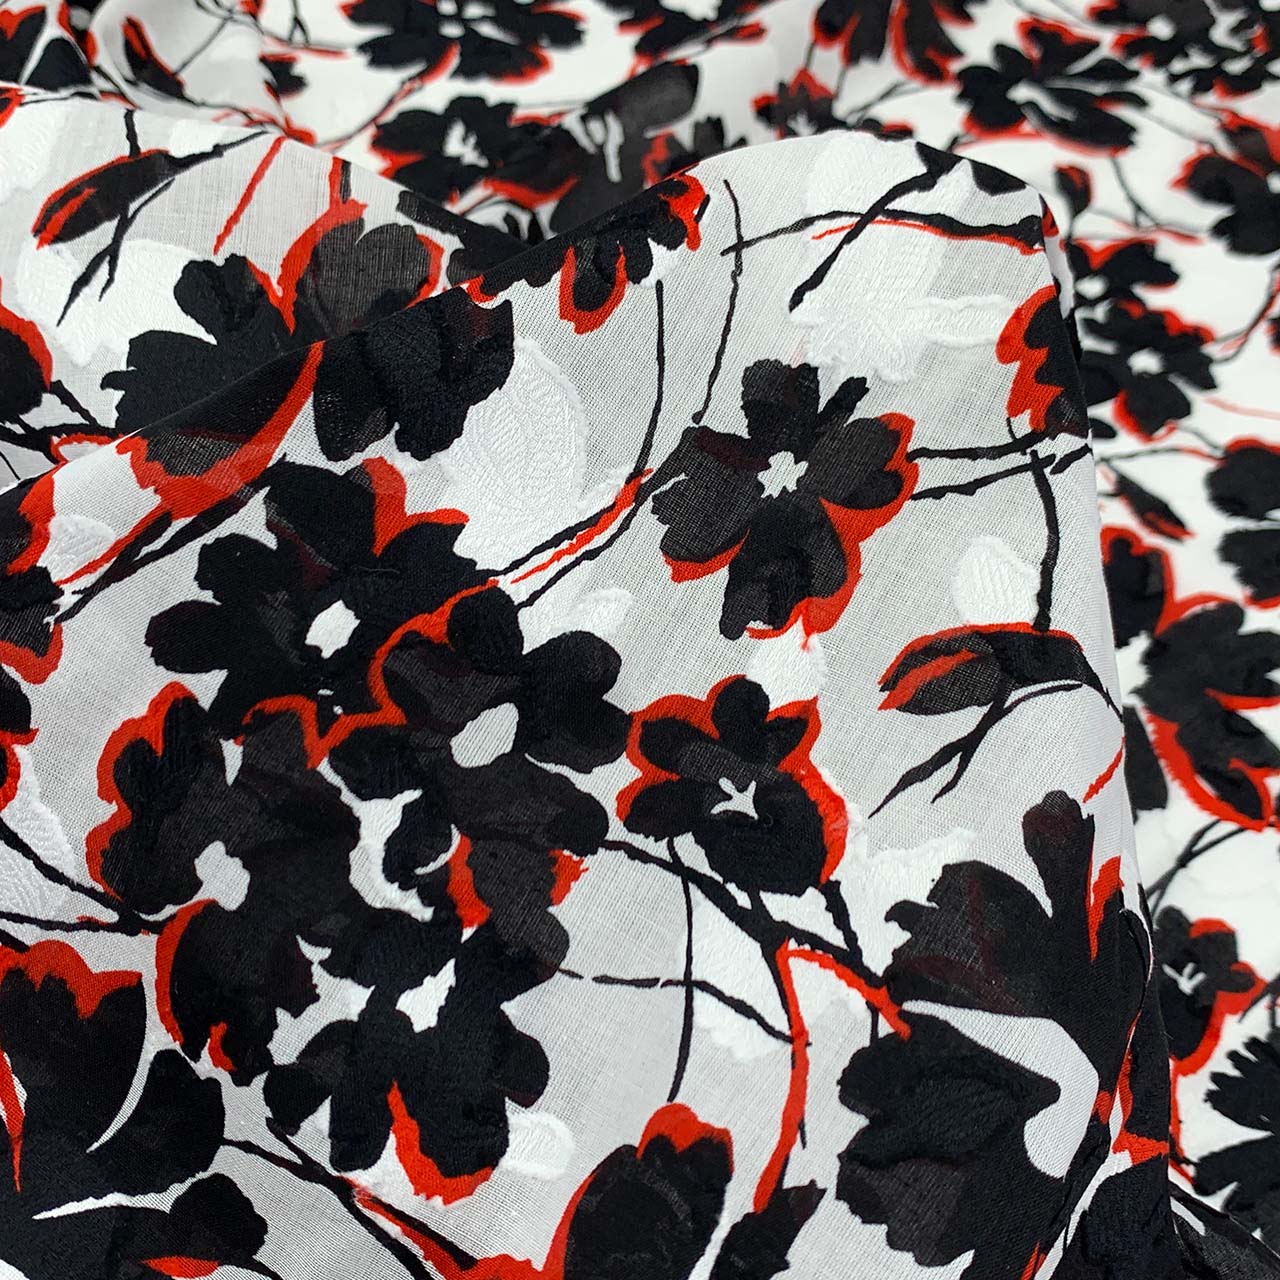 Cotton Voile Jacquard | Red, Black & White Floral Print